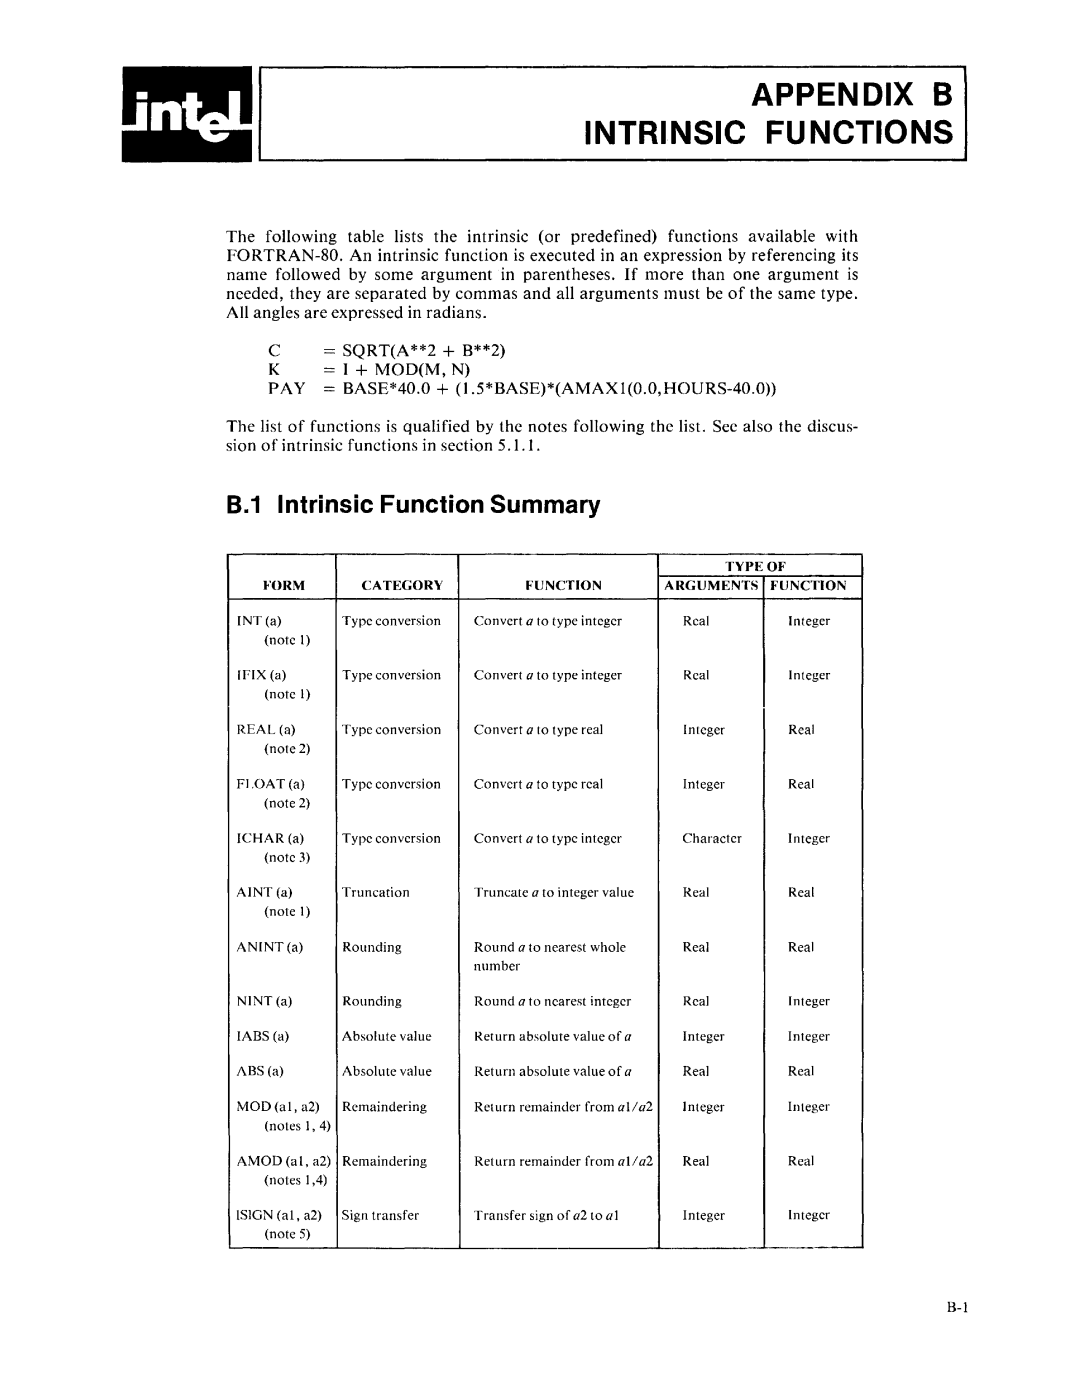 Intel fortran-80 manual Appendix B Intrinsic Functions, B.1 Intrinsic Function Summary 